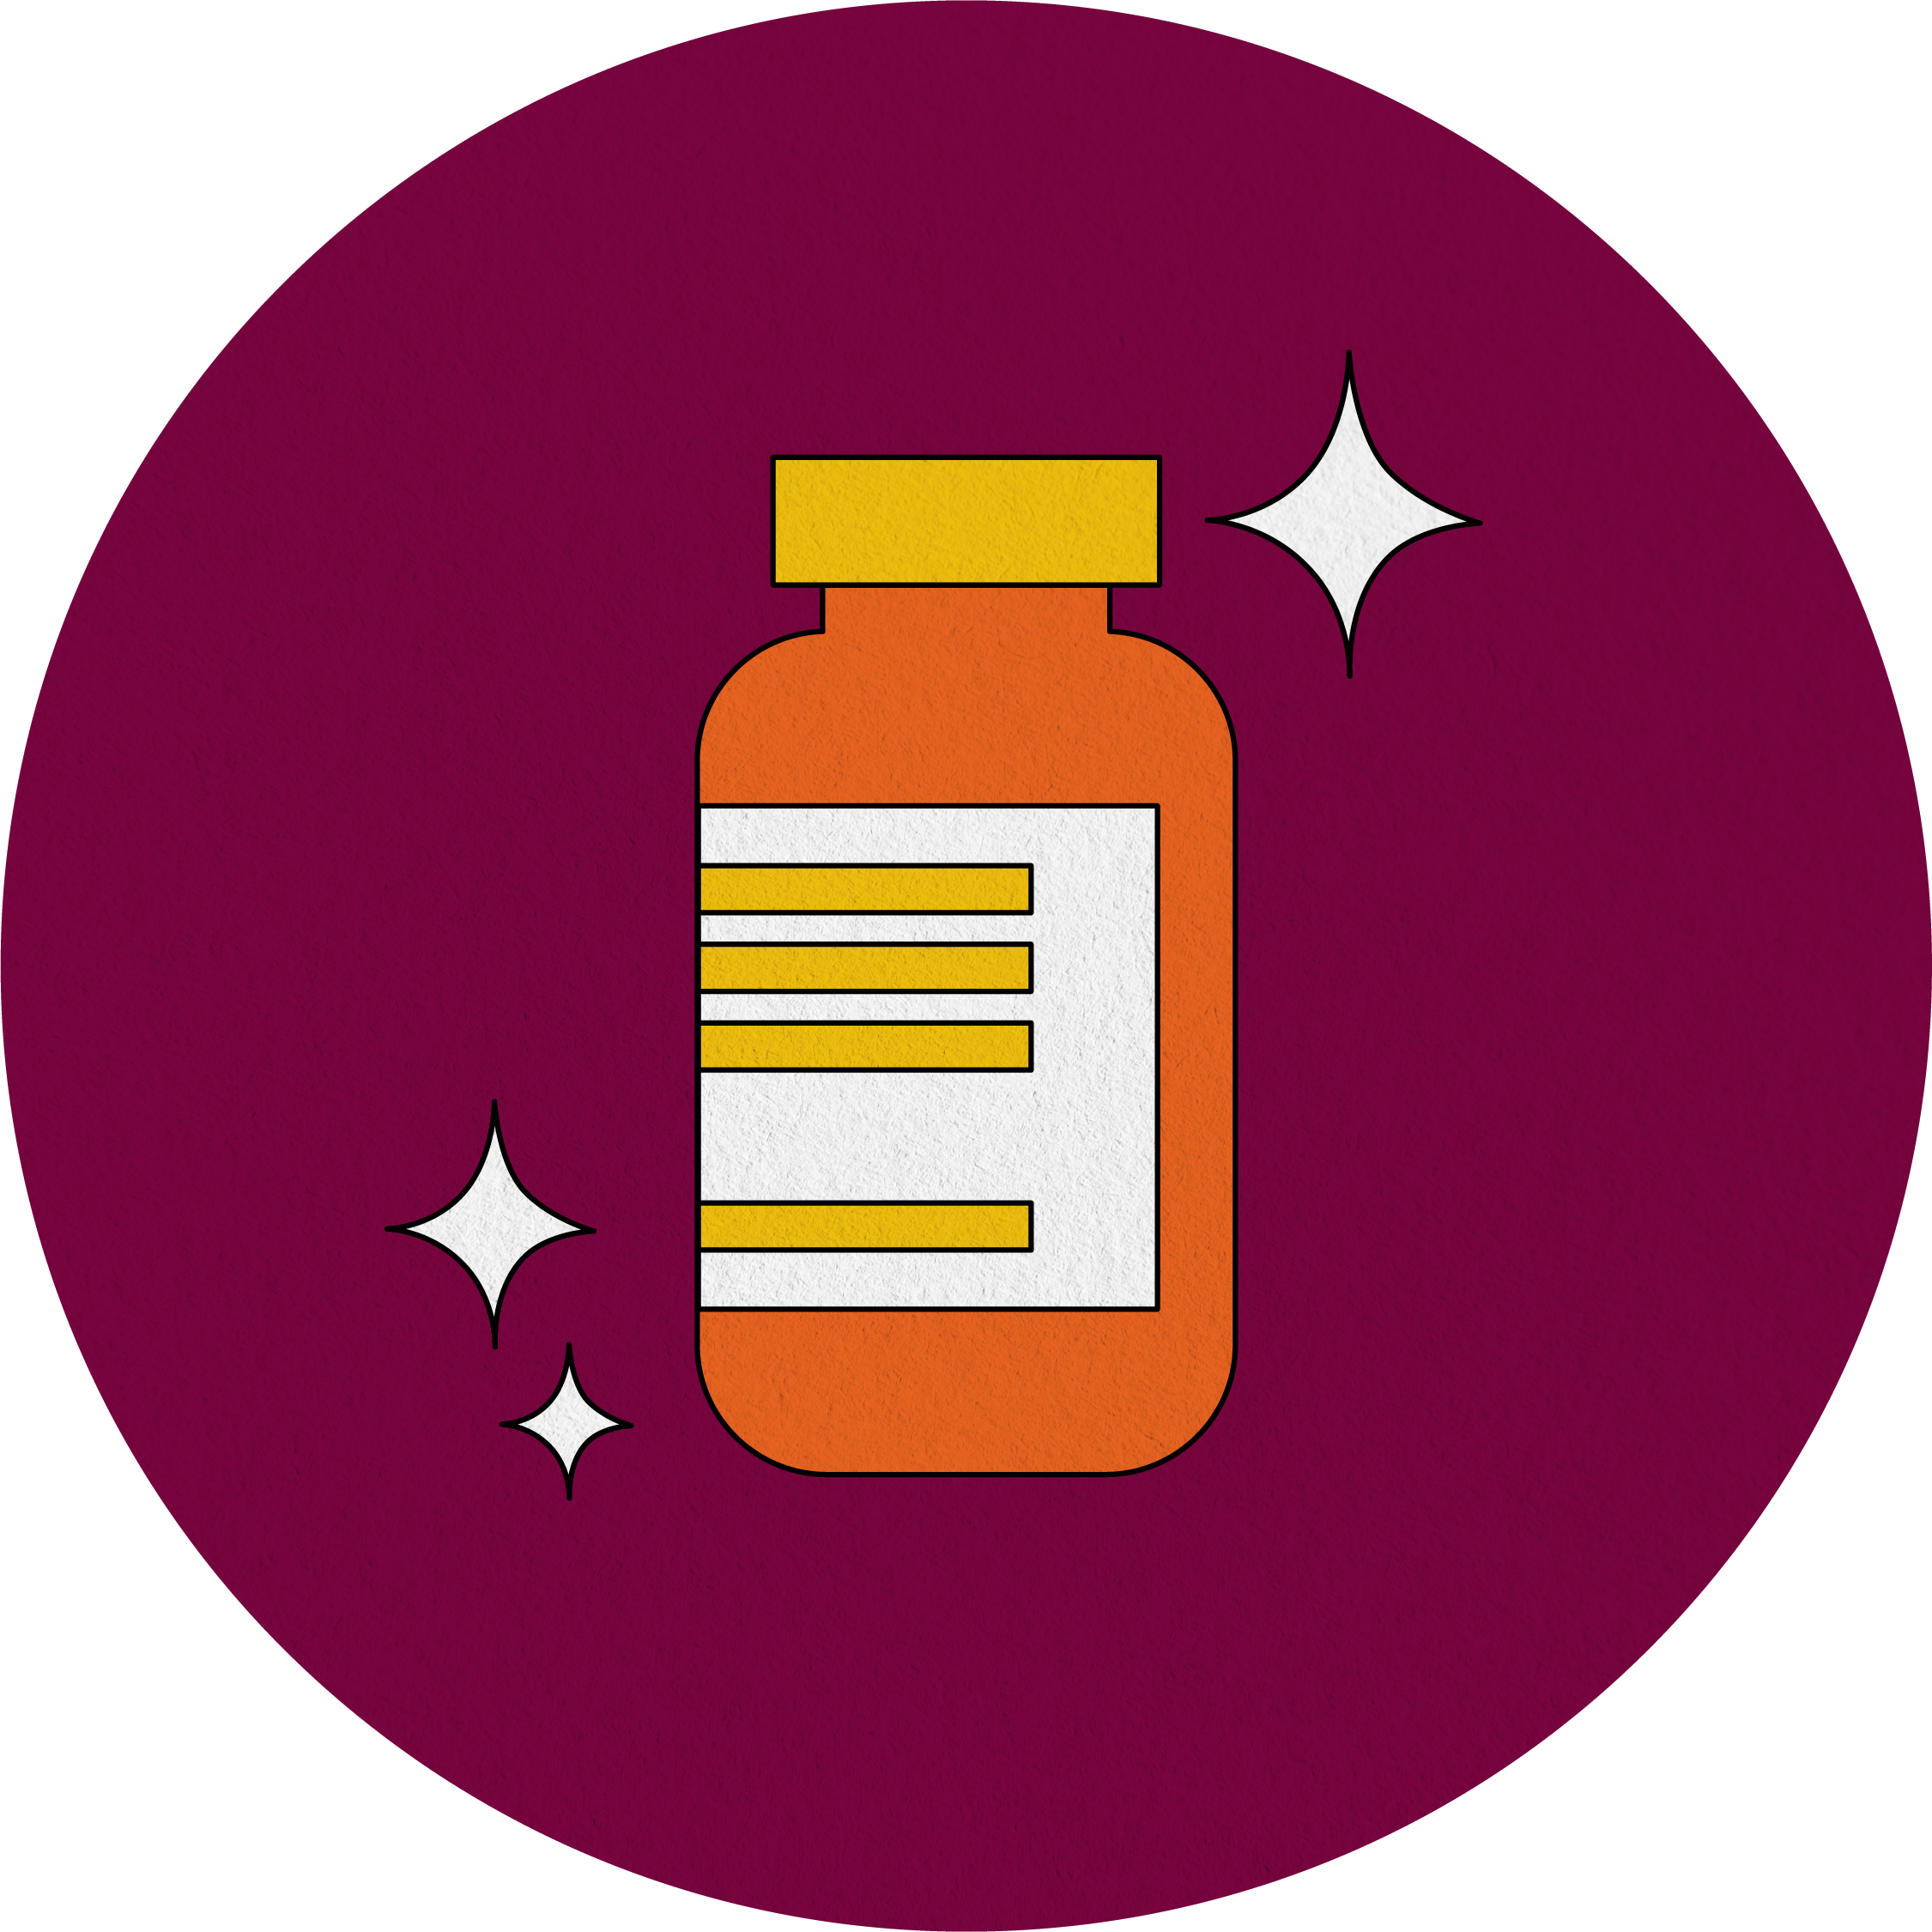 Illustration of orange vaccine vial with stars around it on purple background.